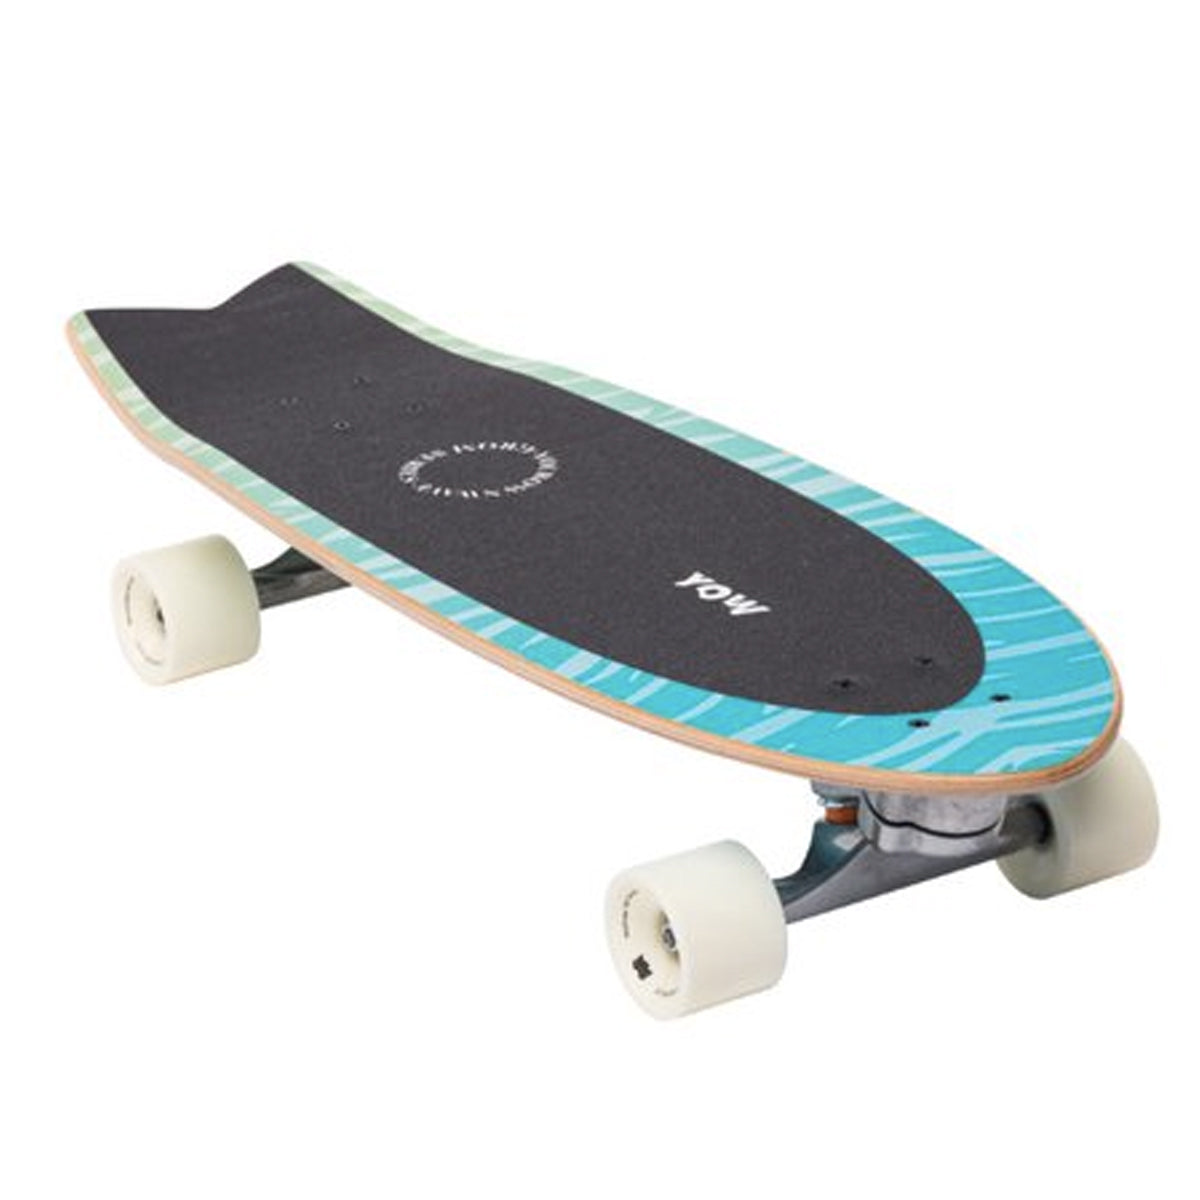 Yow Snappers .5" Meraki S5 Surfskate  Complete